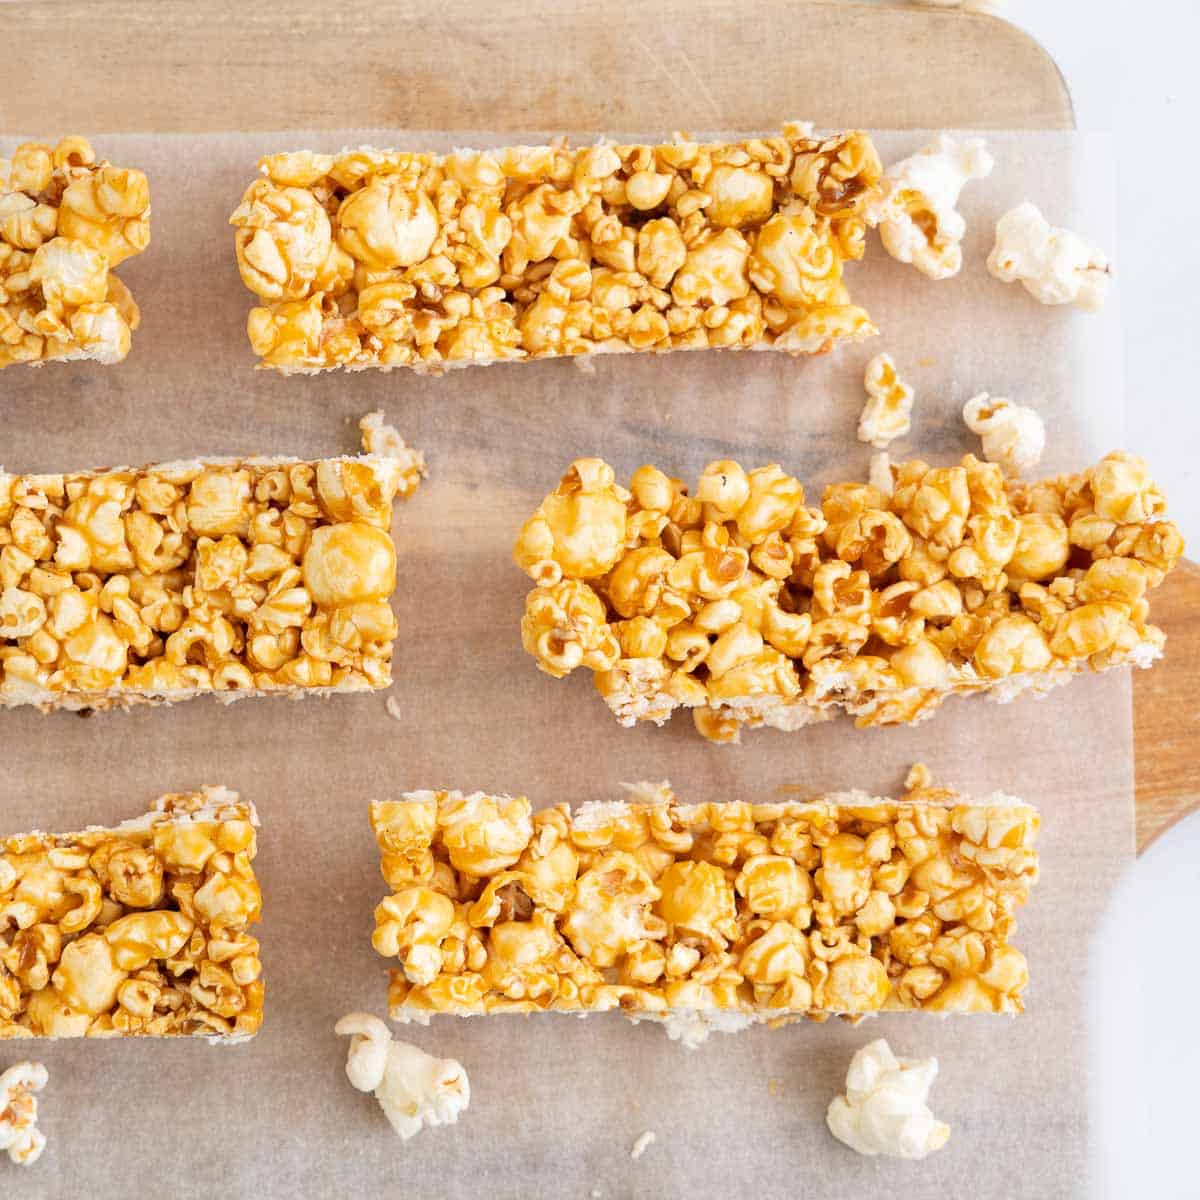 Popcorn Nut Treat Recipe: How to Make It